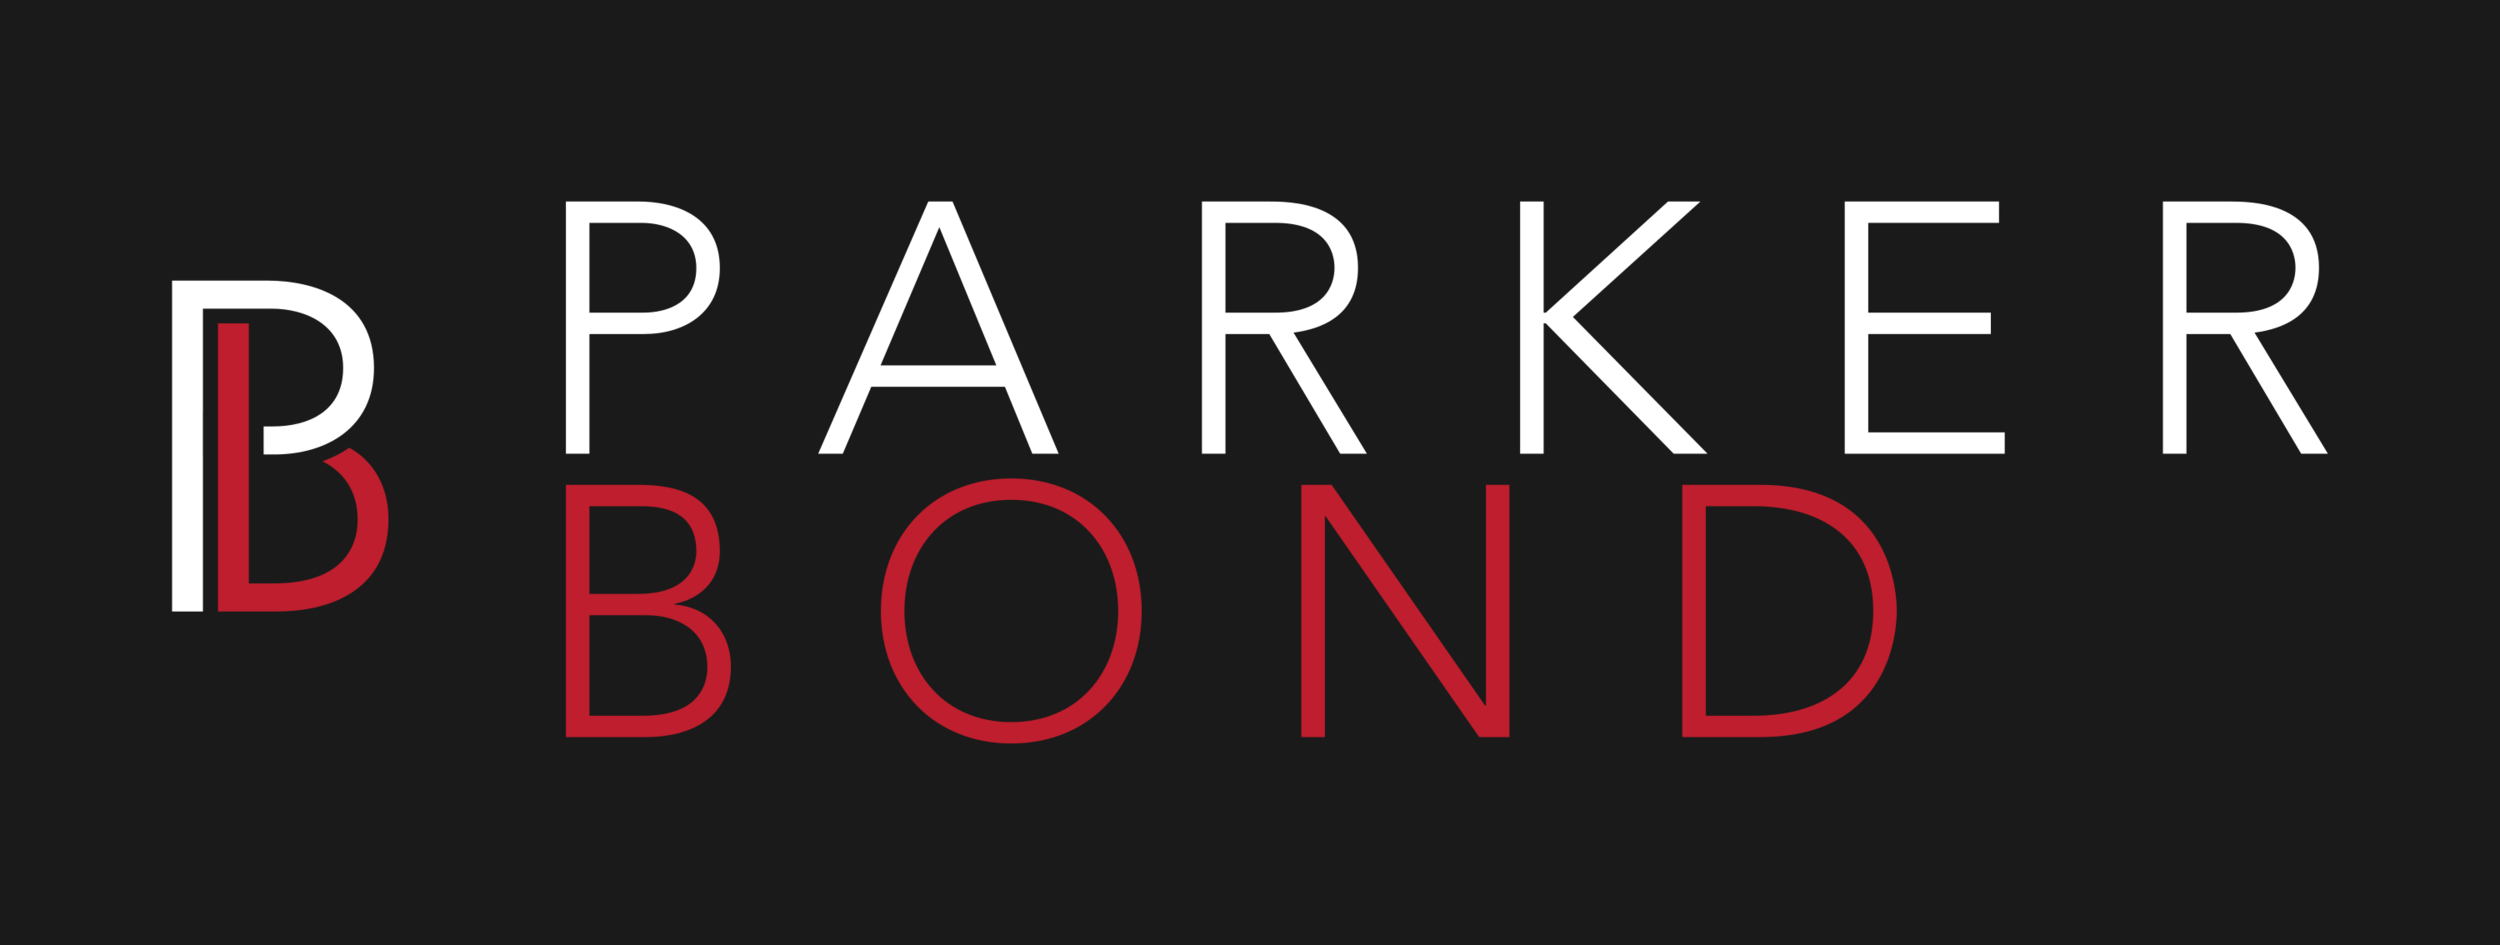 DARK ParkerBond (PNG).png